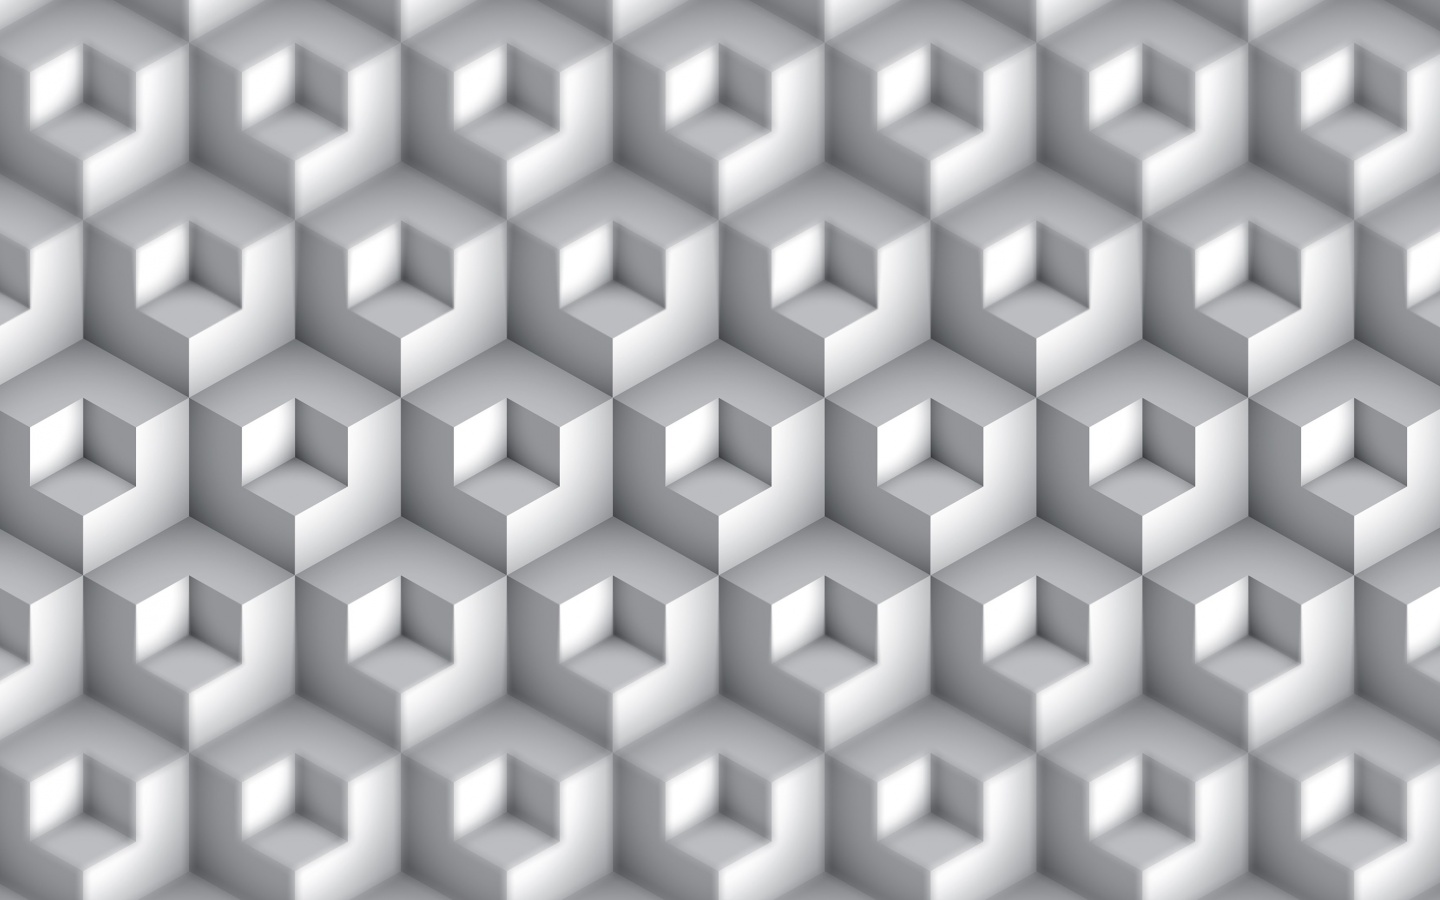 Cube Pattern